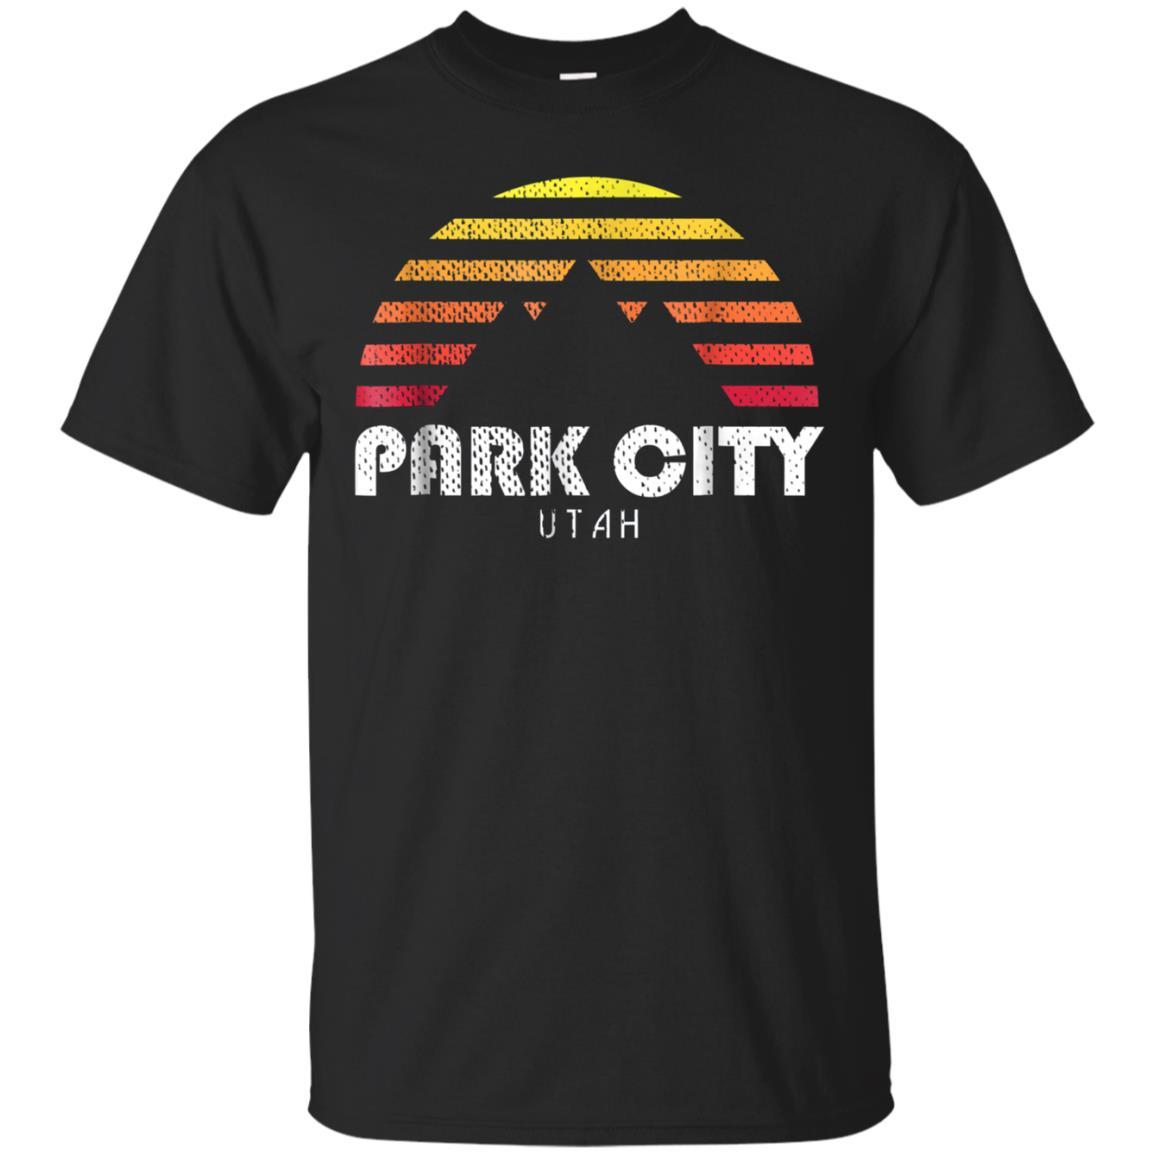 Park City Utah Shirt - Retro Vintage Style Mountains Sunset